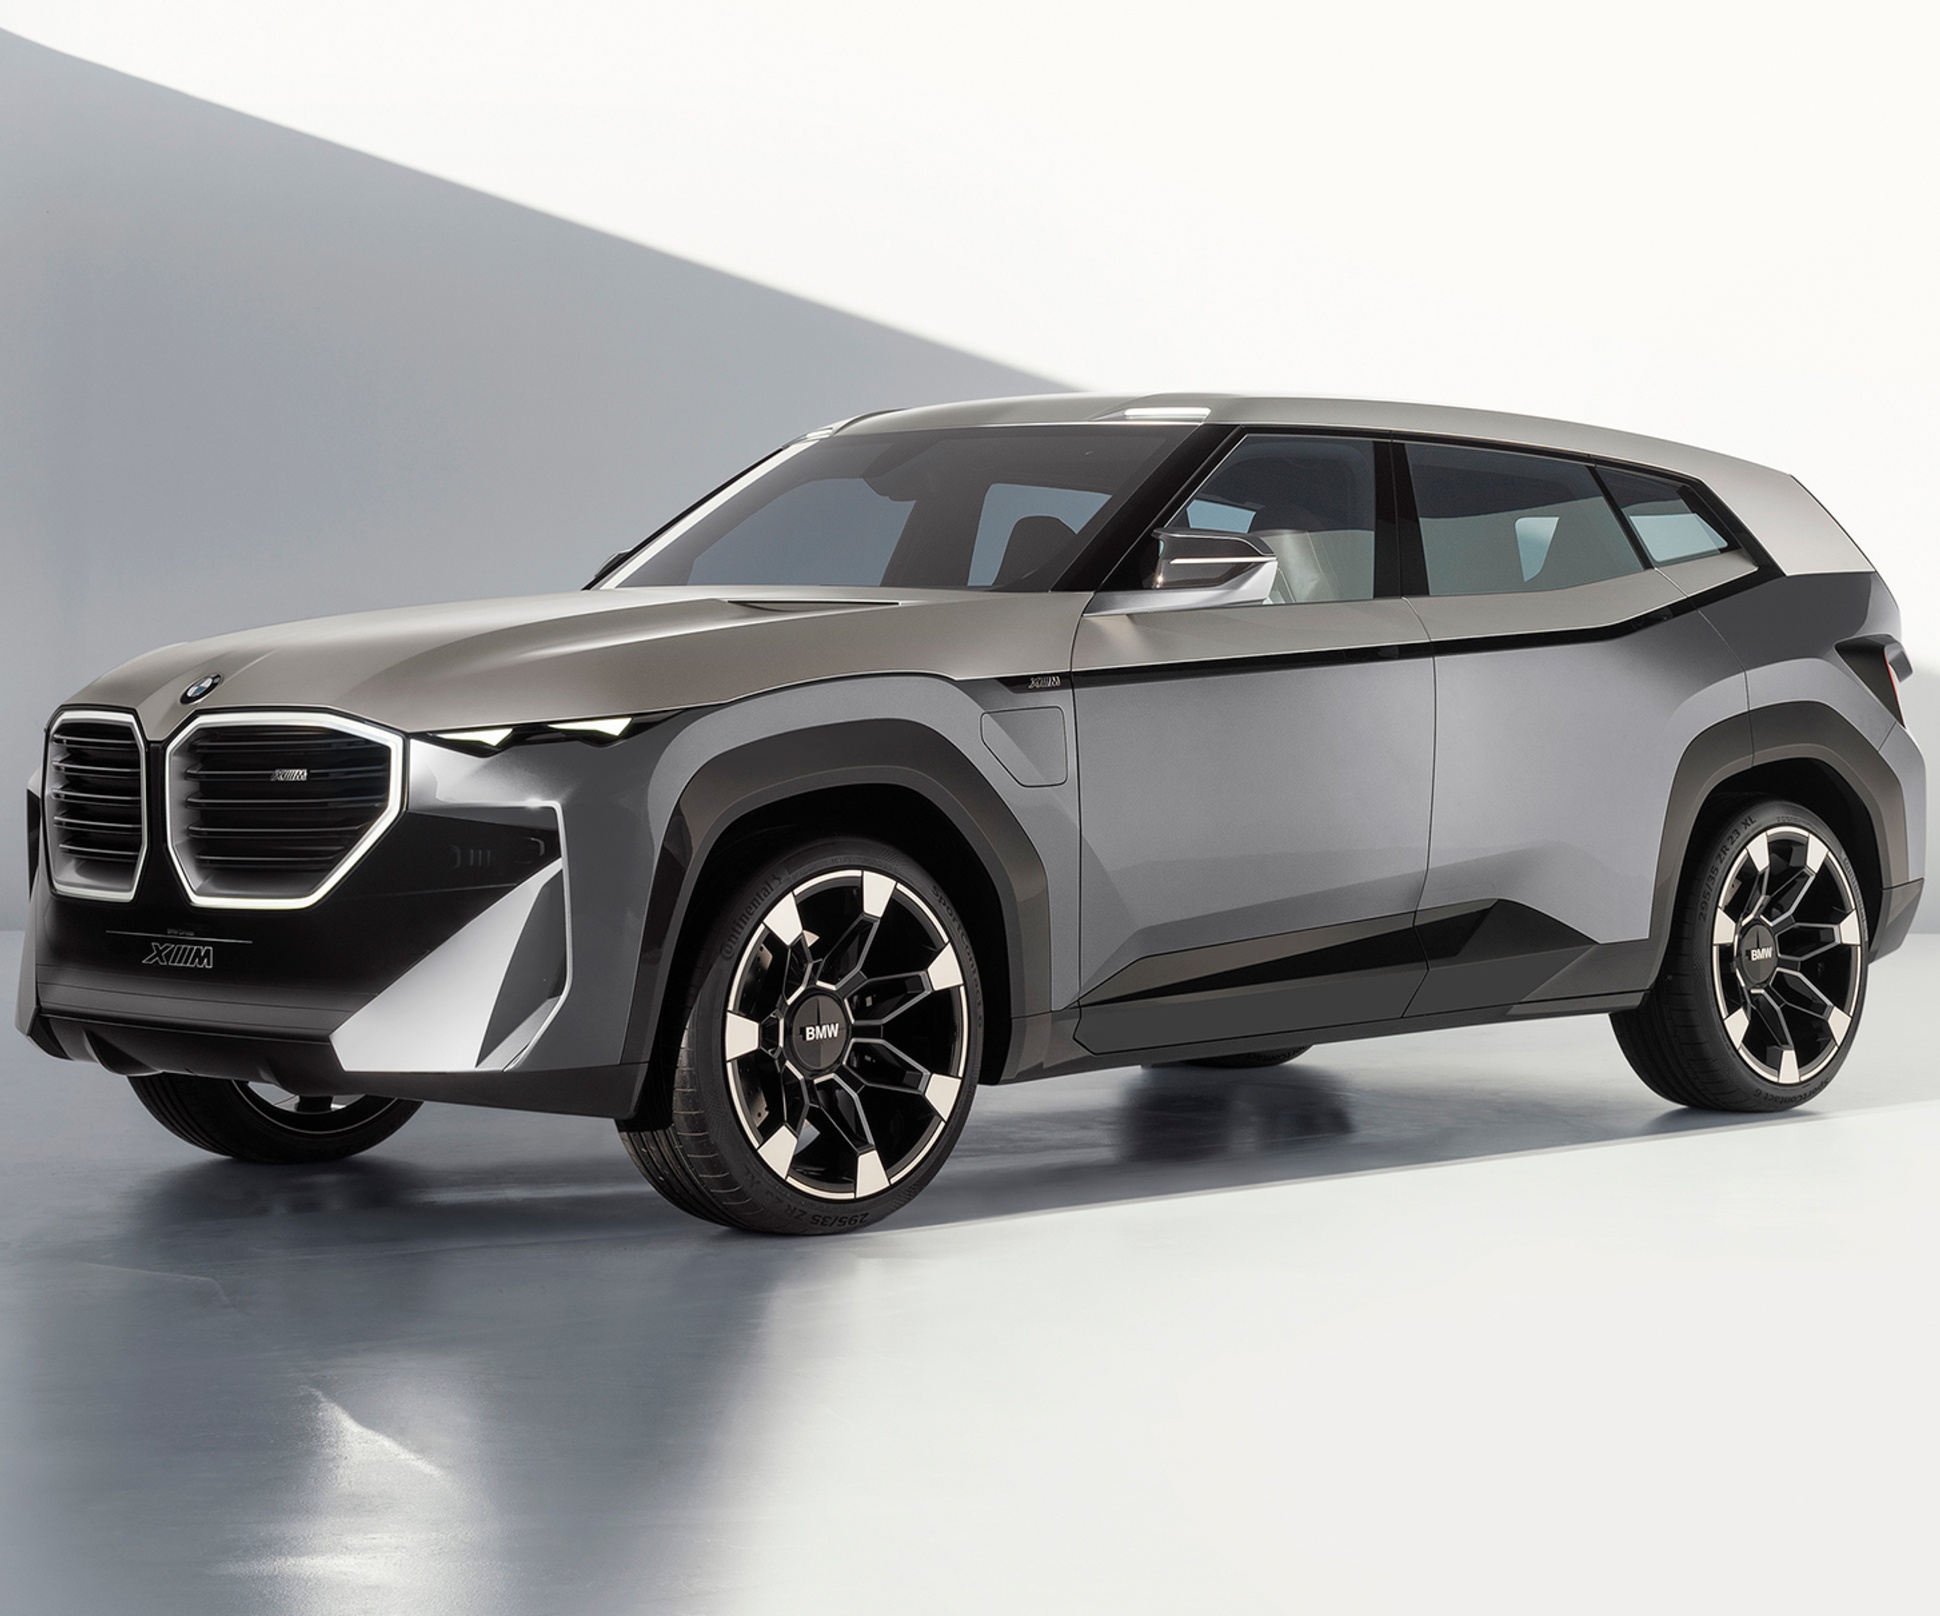 BMW unveils powerful new XM concept